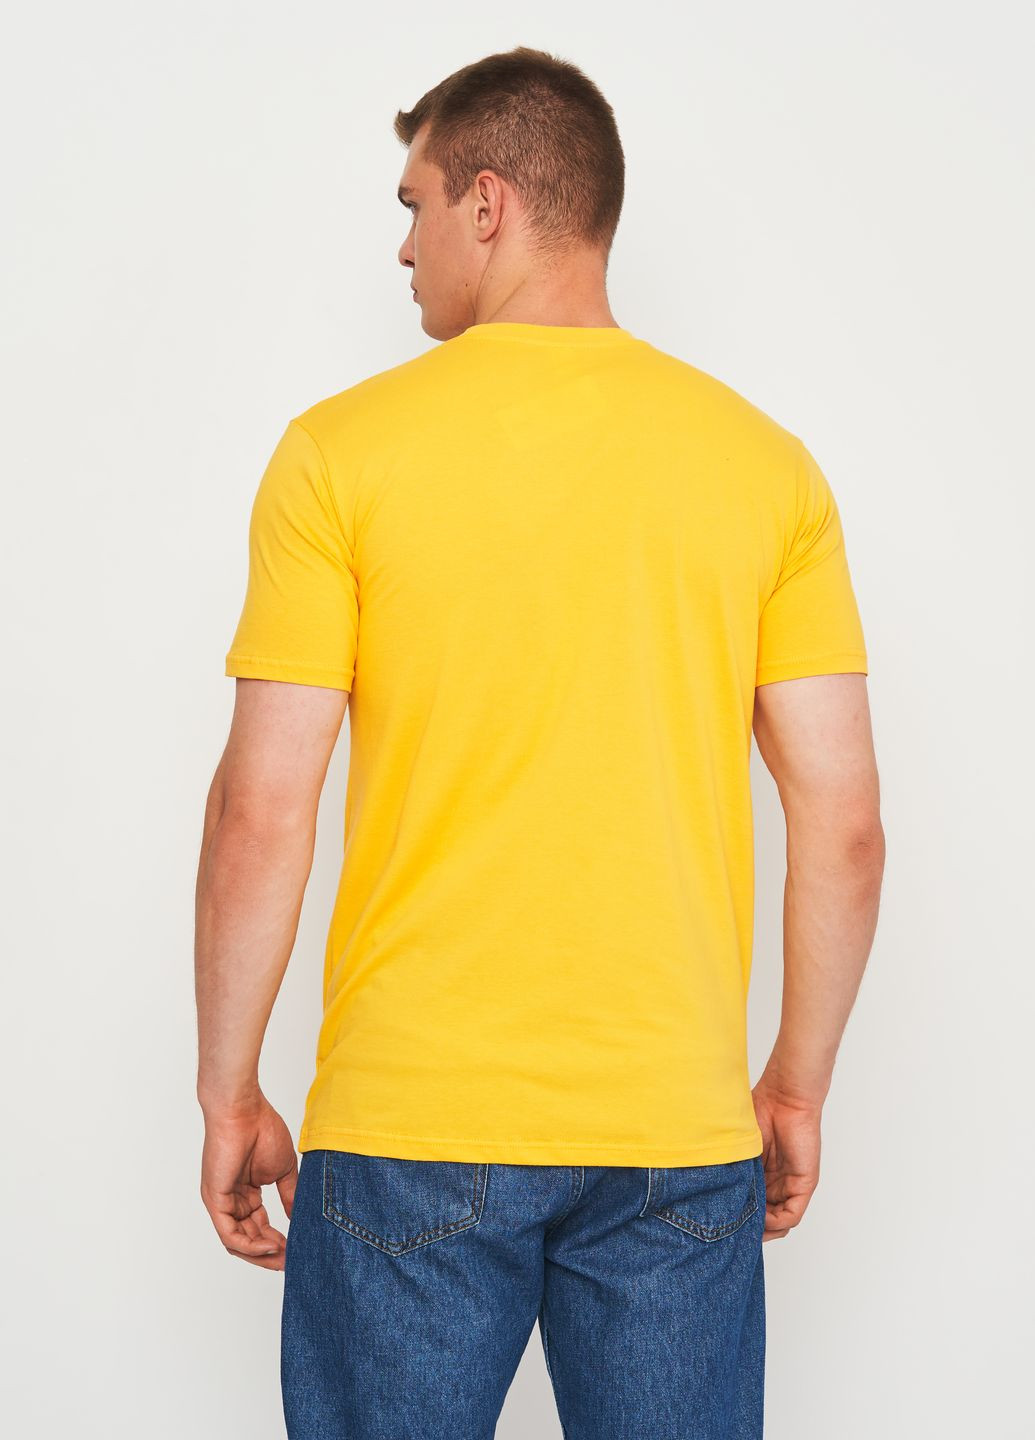 Желтая футболка мужская с коротким рукавом Роза